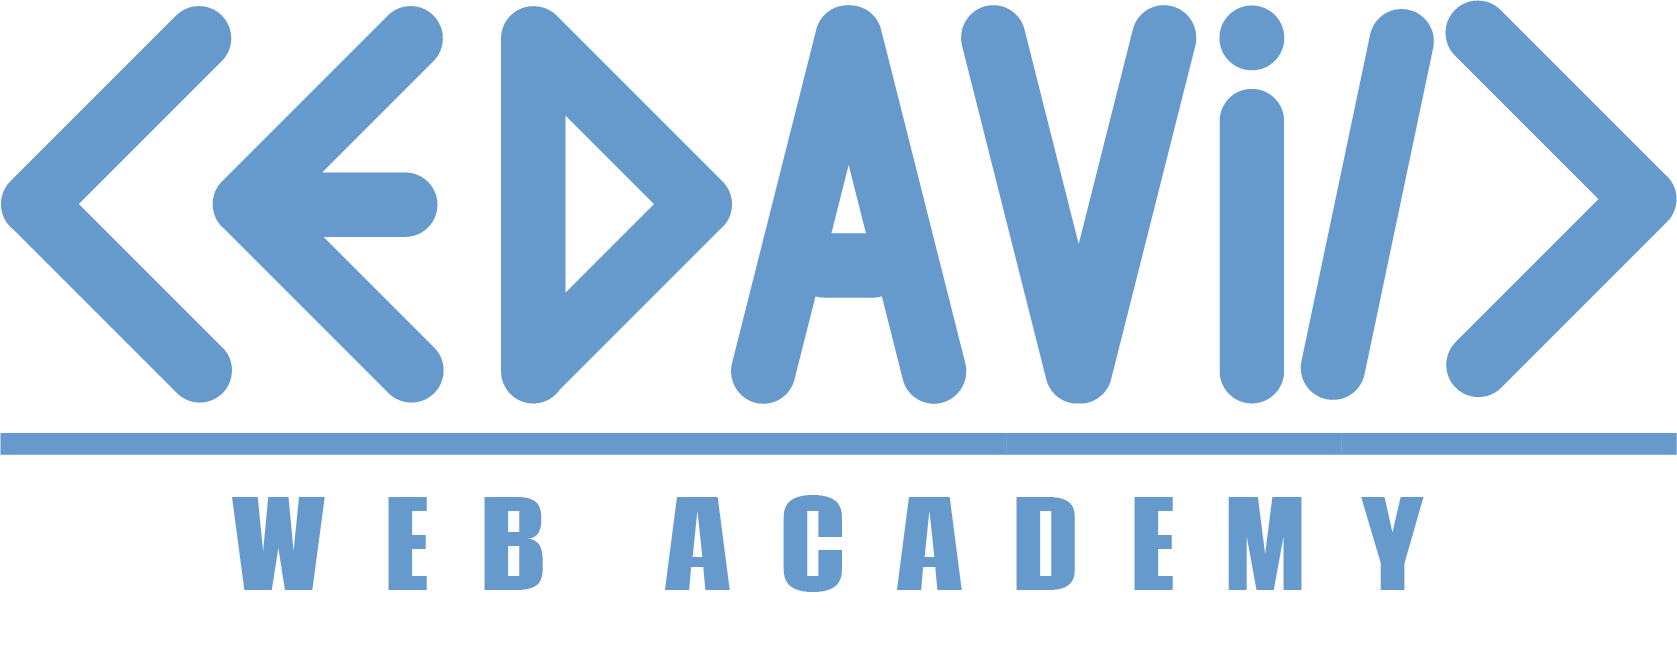 Cedavilu web academy